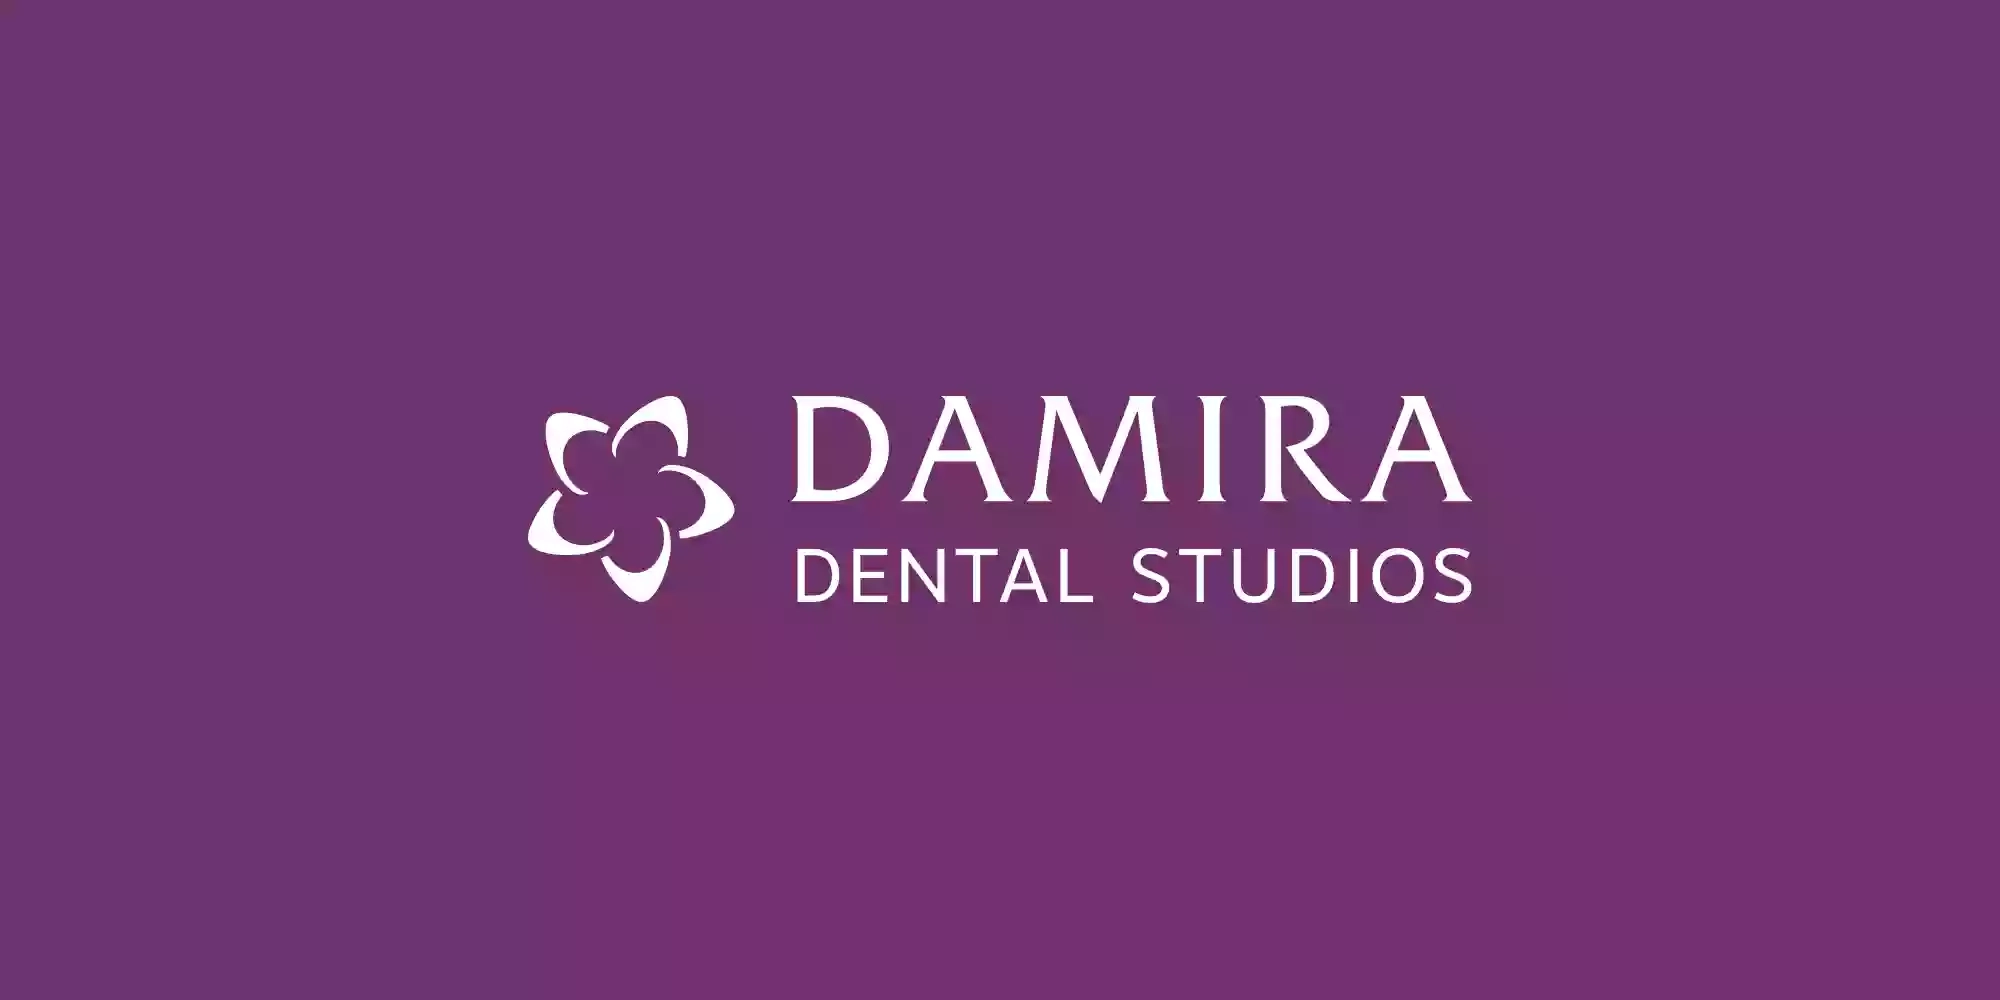 Damira Sharland House Dental Practice